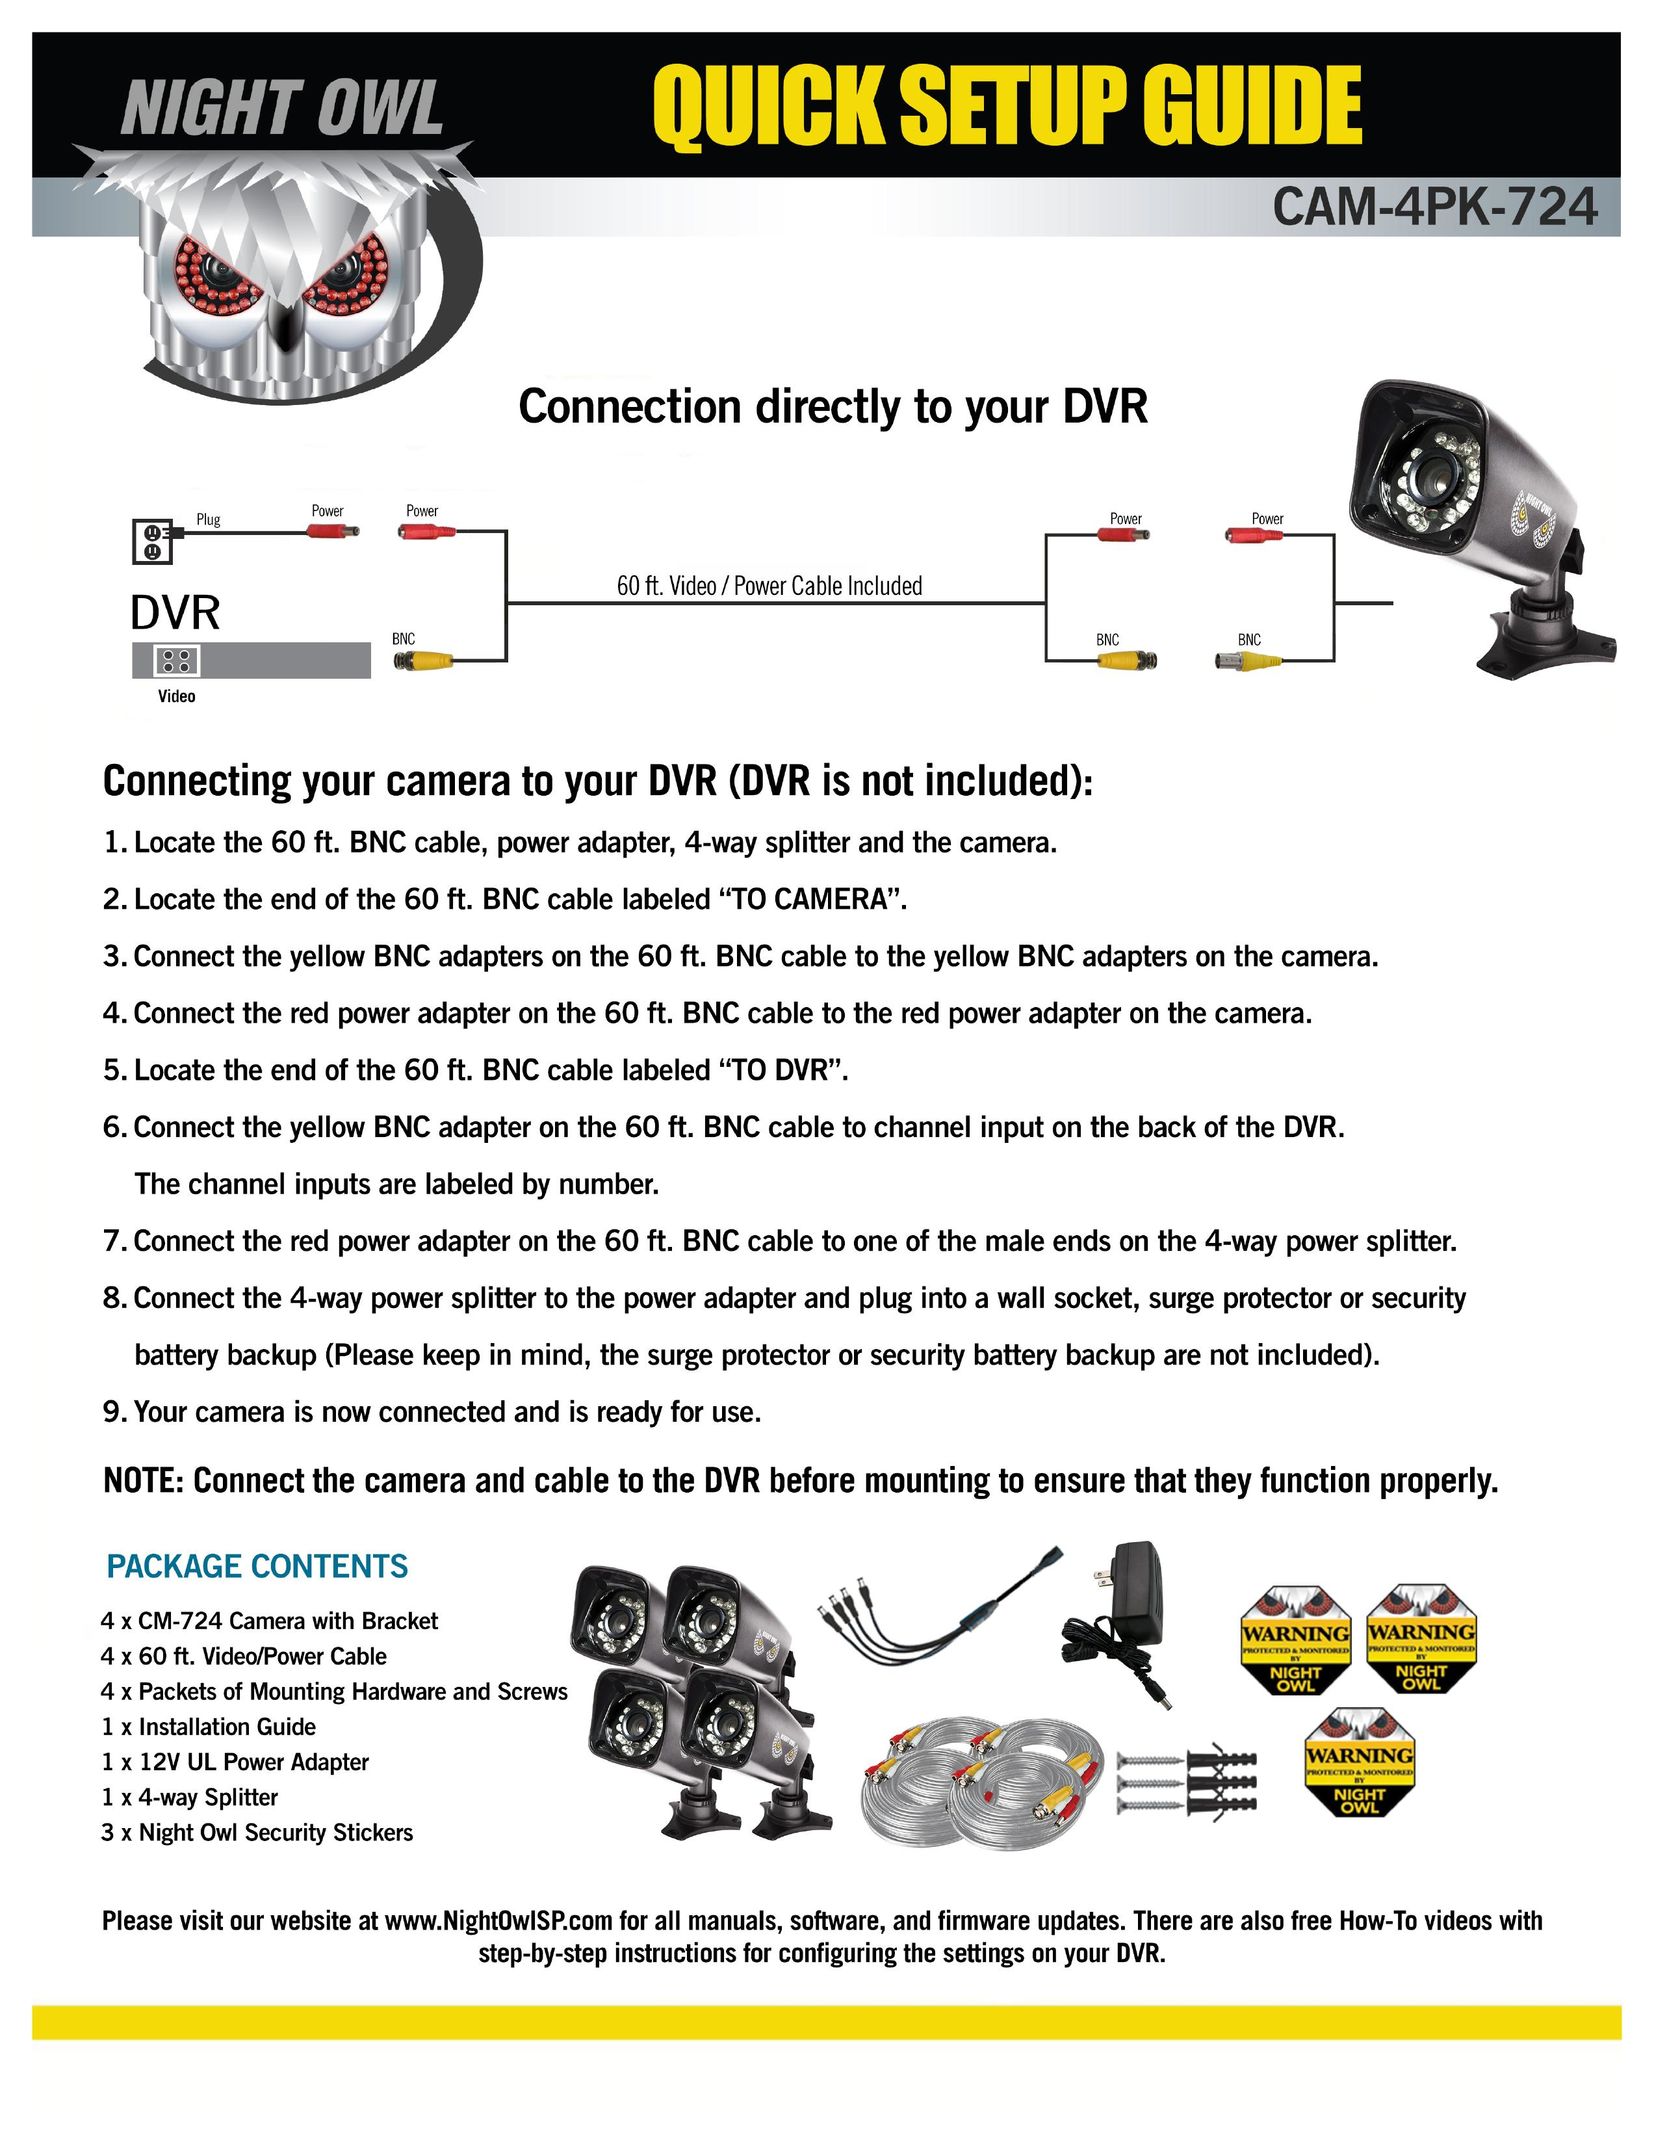 Night Owl Optics CAM-4PK-724 Home Security System User Manual